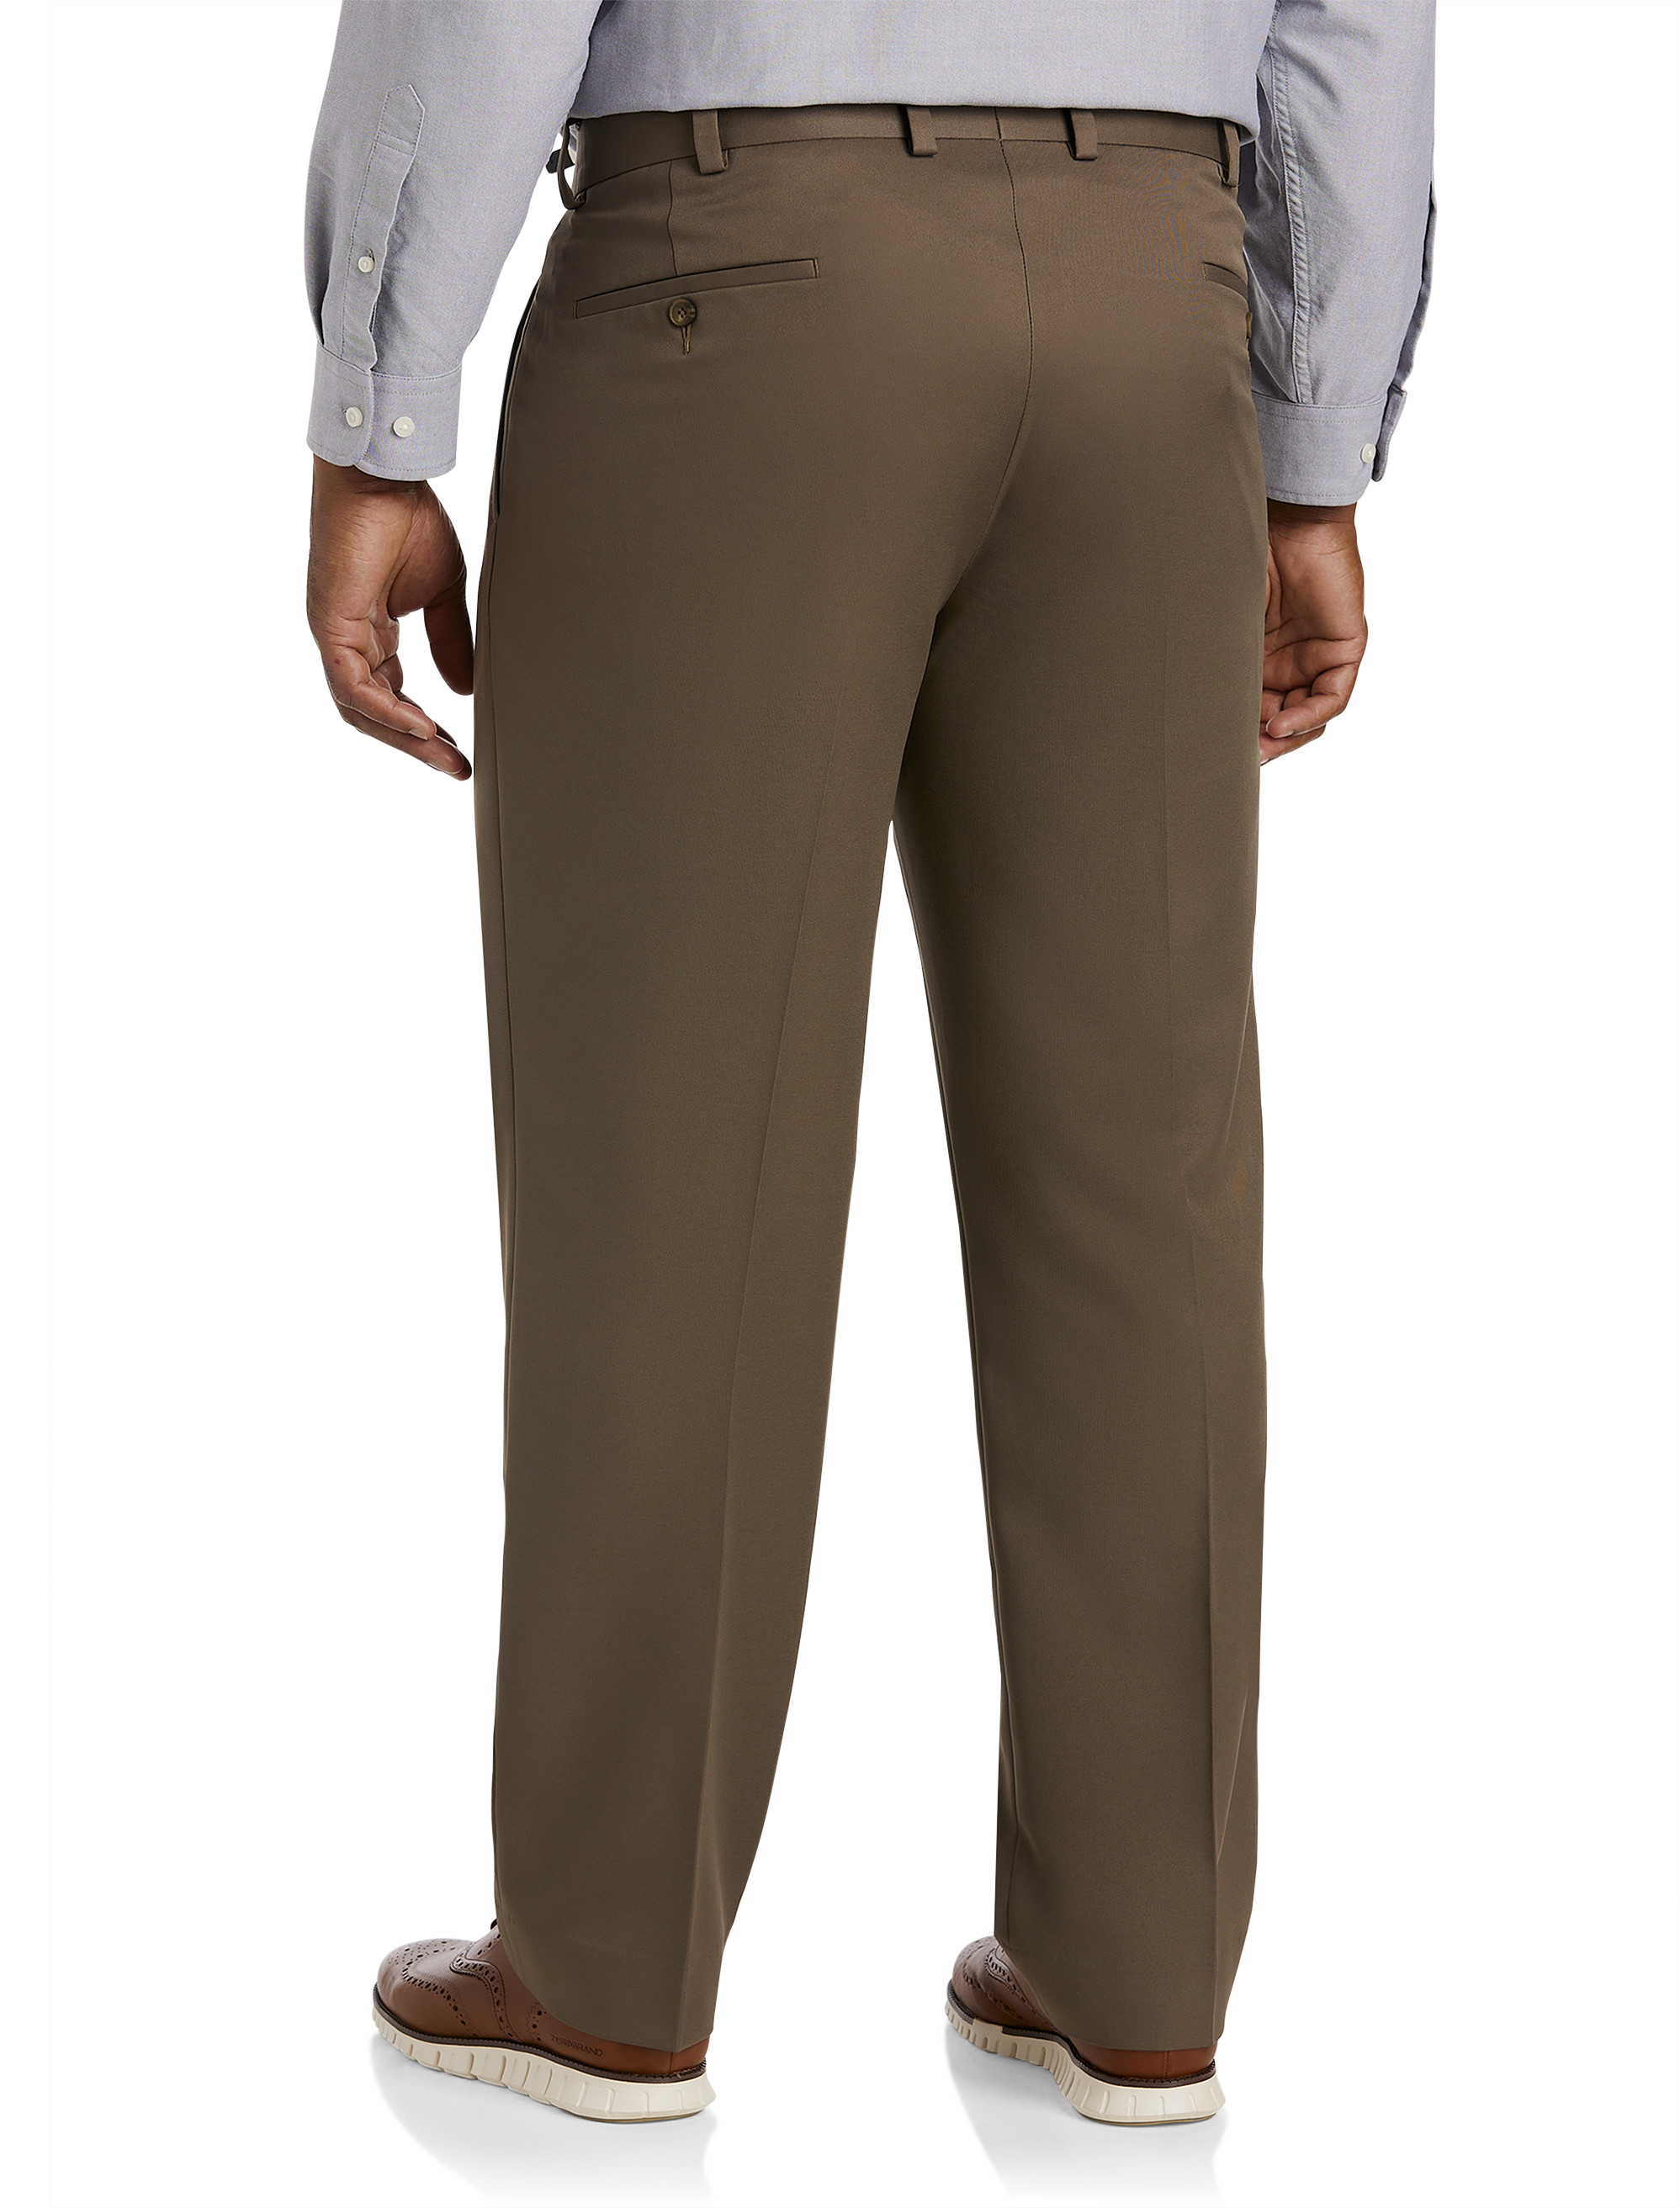 George Big & Tall Men's Pleated Cuffed Microfiber Dress Pants with